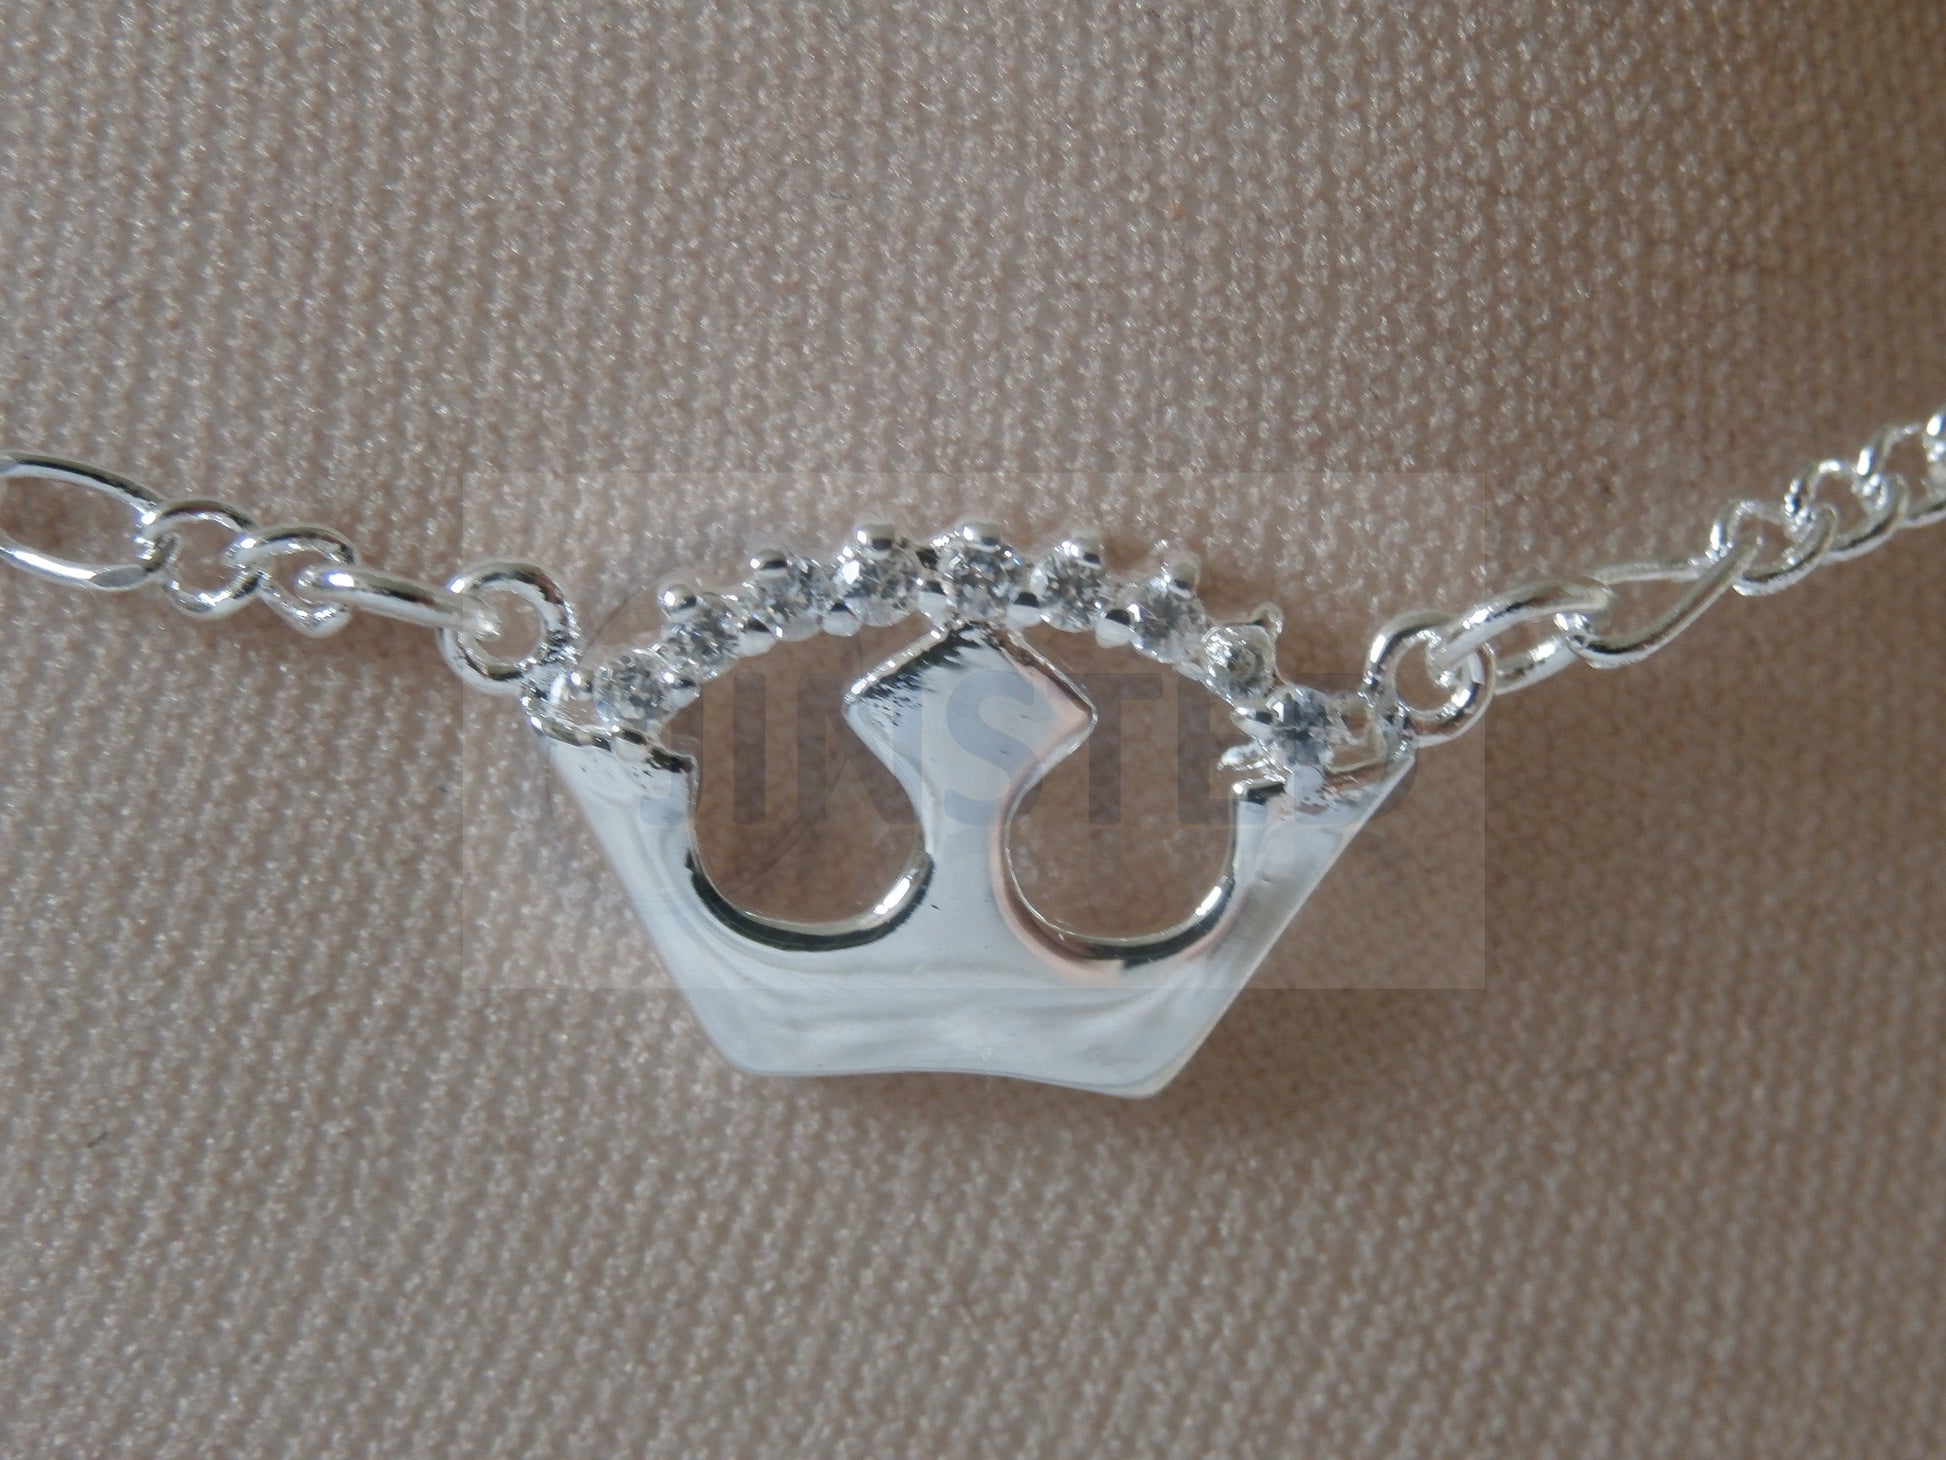 Ladies Jewellery, Silver Anklet with Crown Design, Jinsted